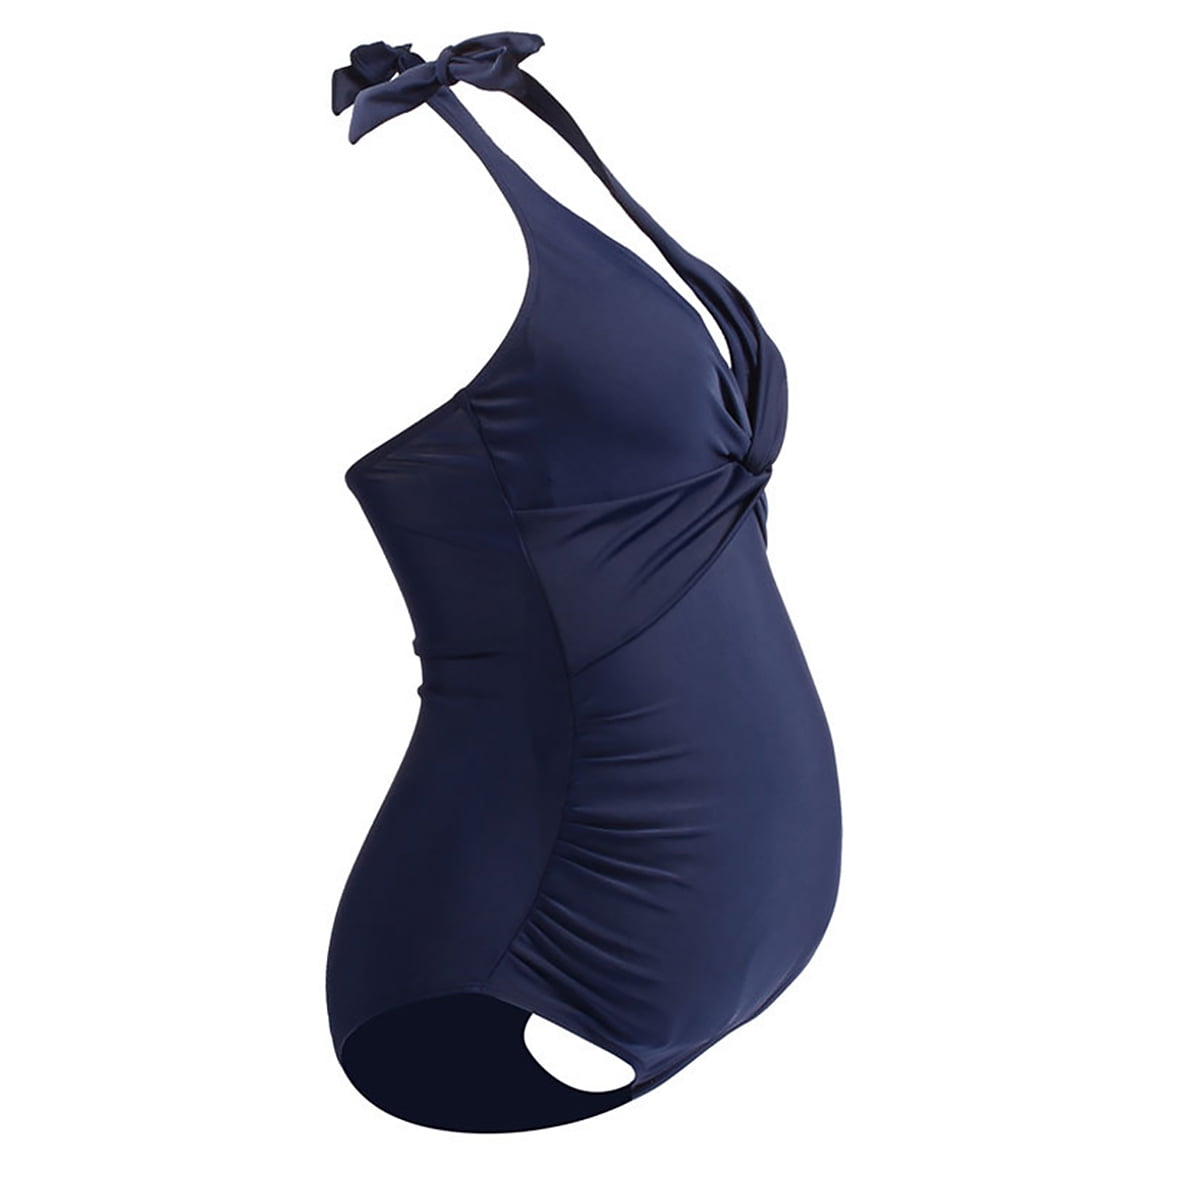 HAWEE Women's Maternity Swimsuit Retro Plum Wrap Front Tankini One